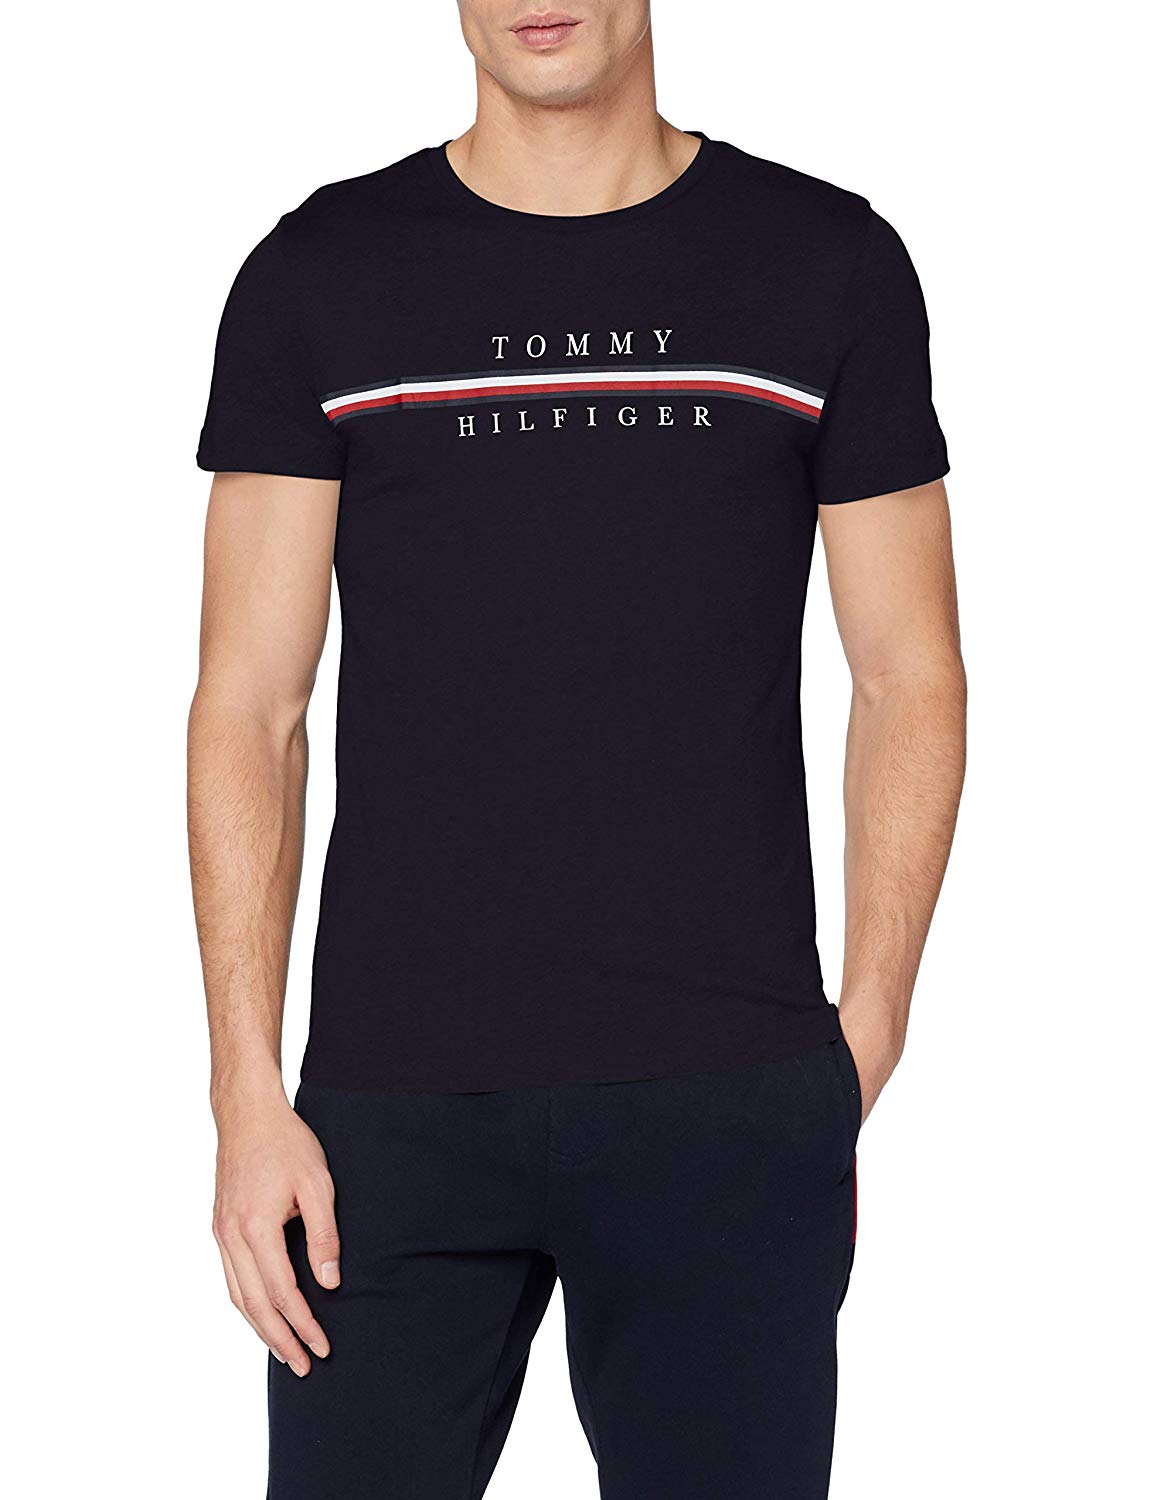 Camiseta para hombre de Tommy Hilfiger » Michollo.com